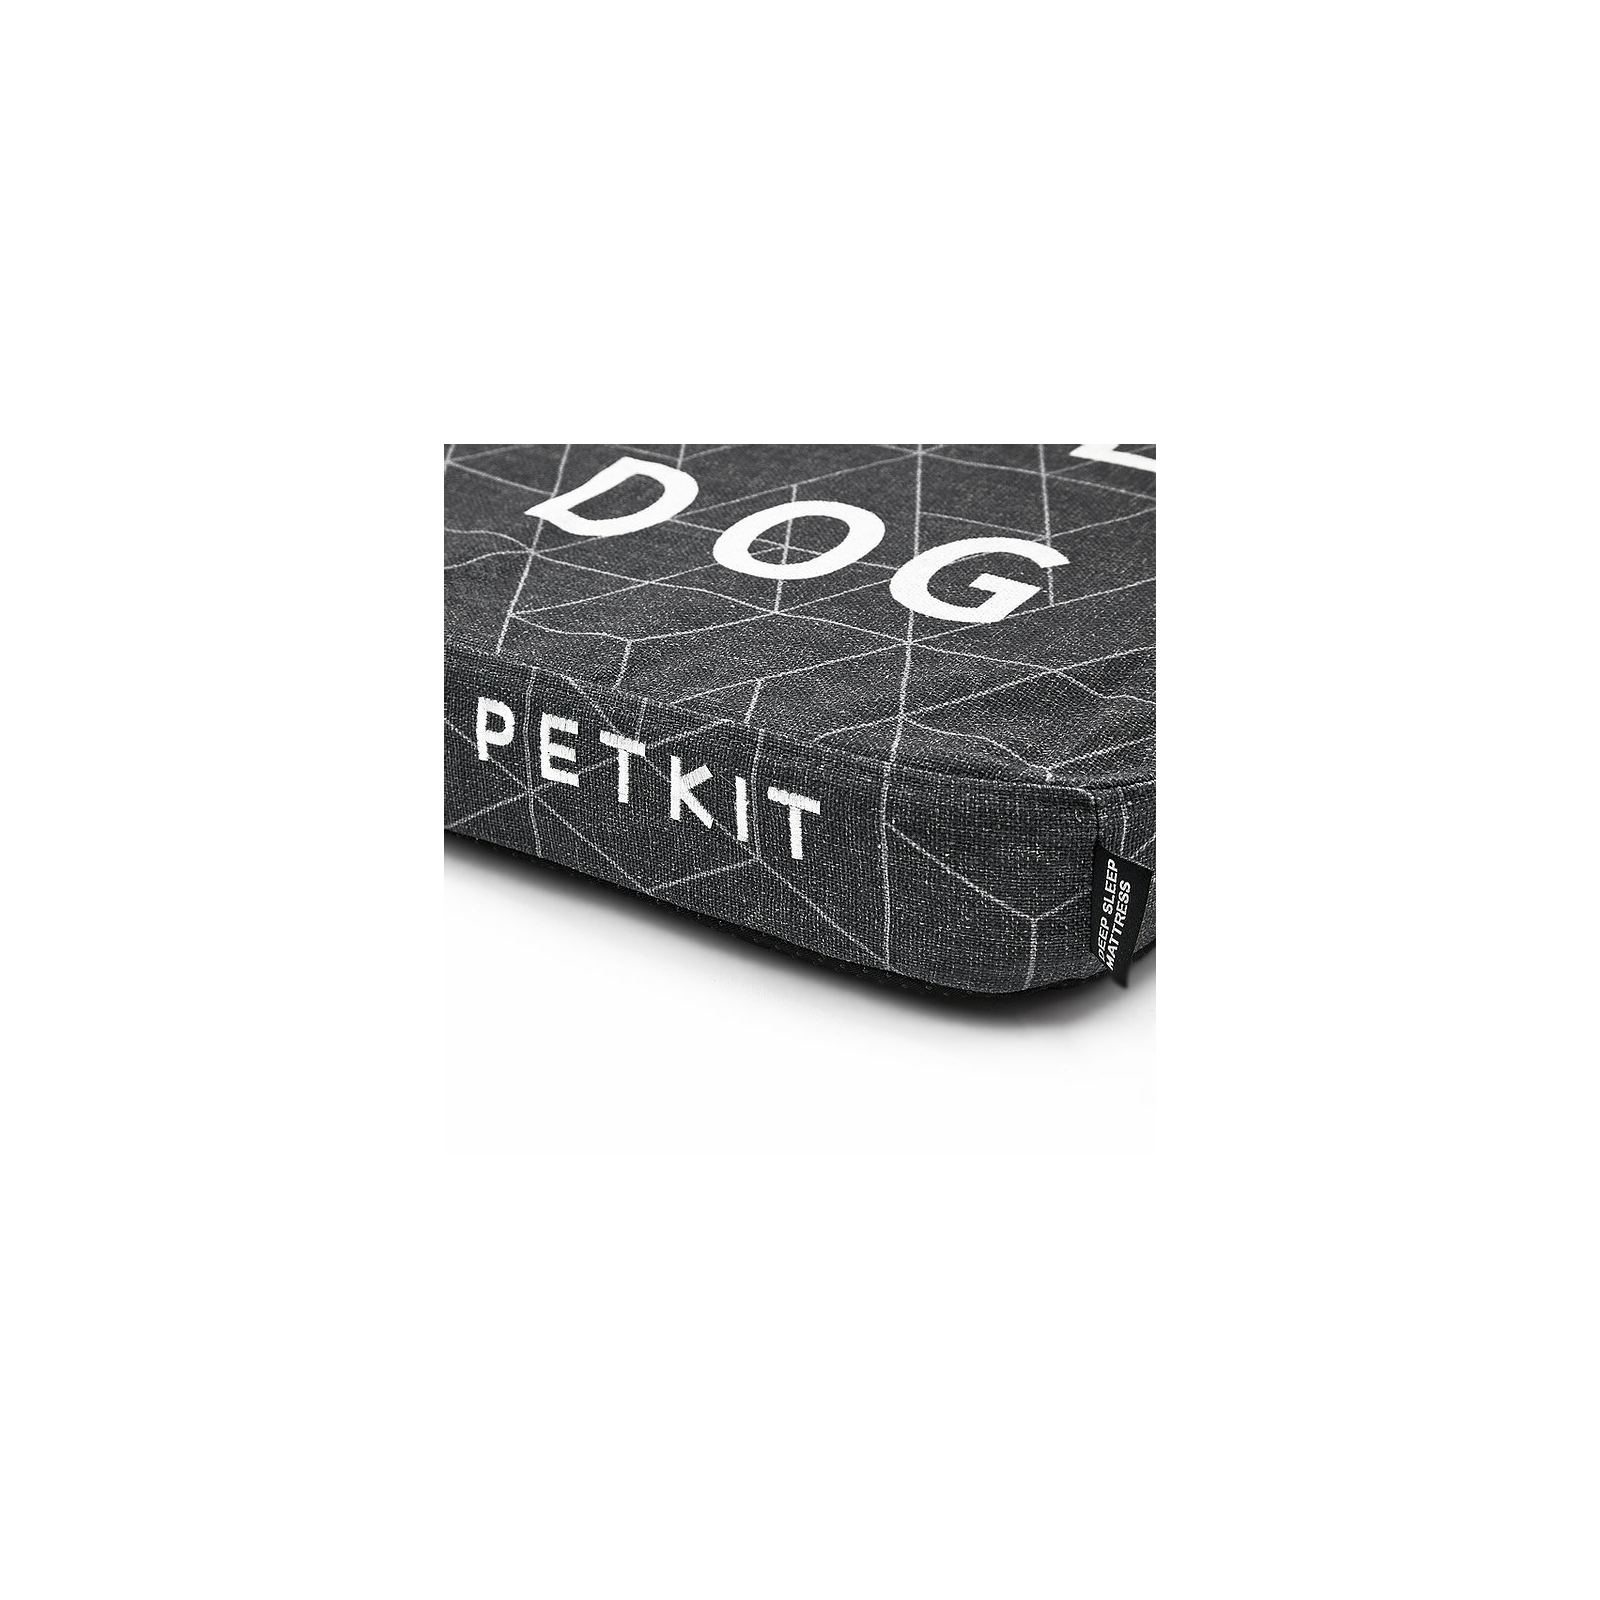 Чохол на матраци для тварин Petkit Deep Sleep Bed Mettress (L) (680485) зображення 3